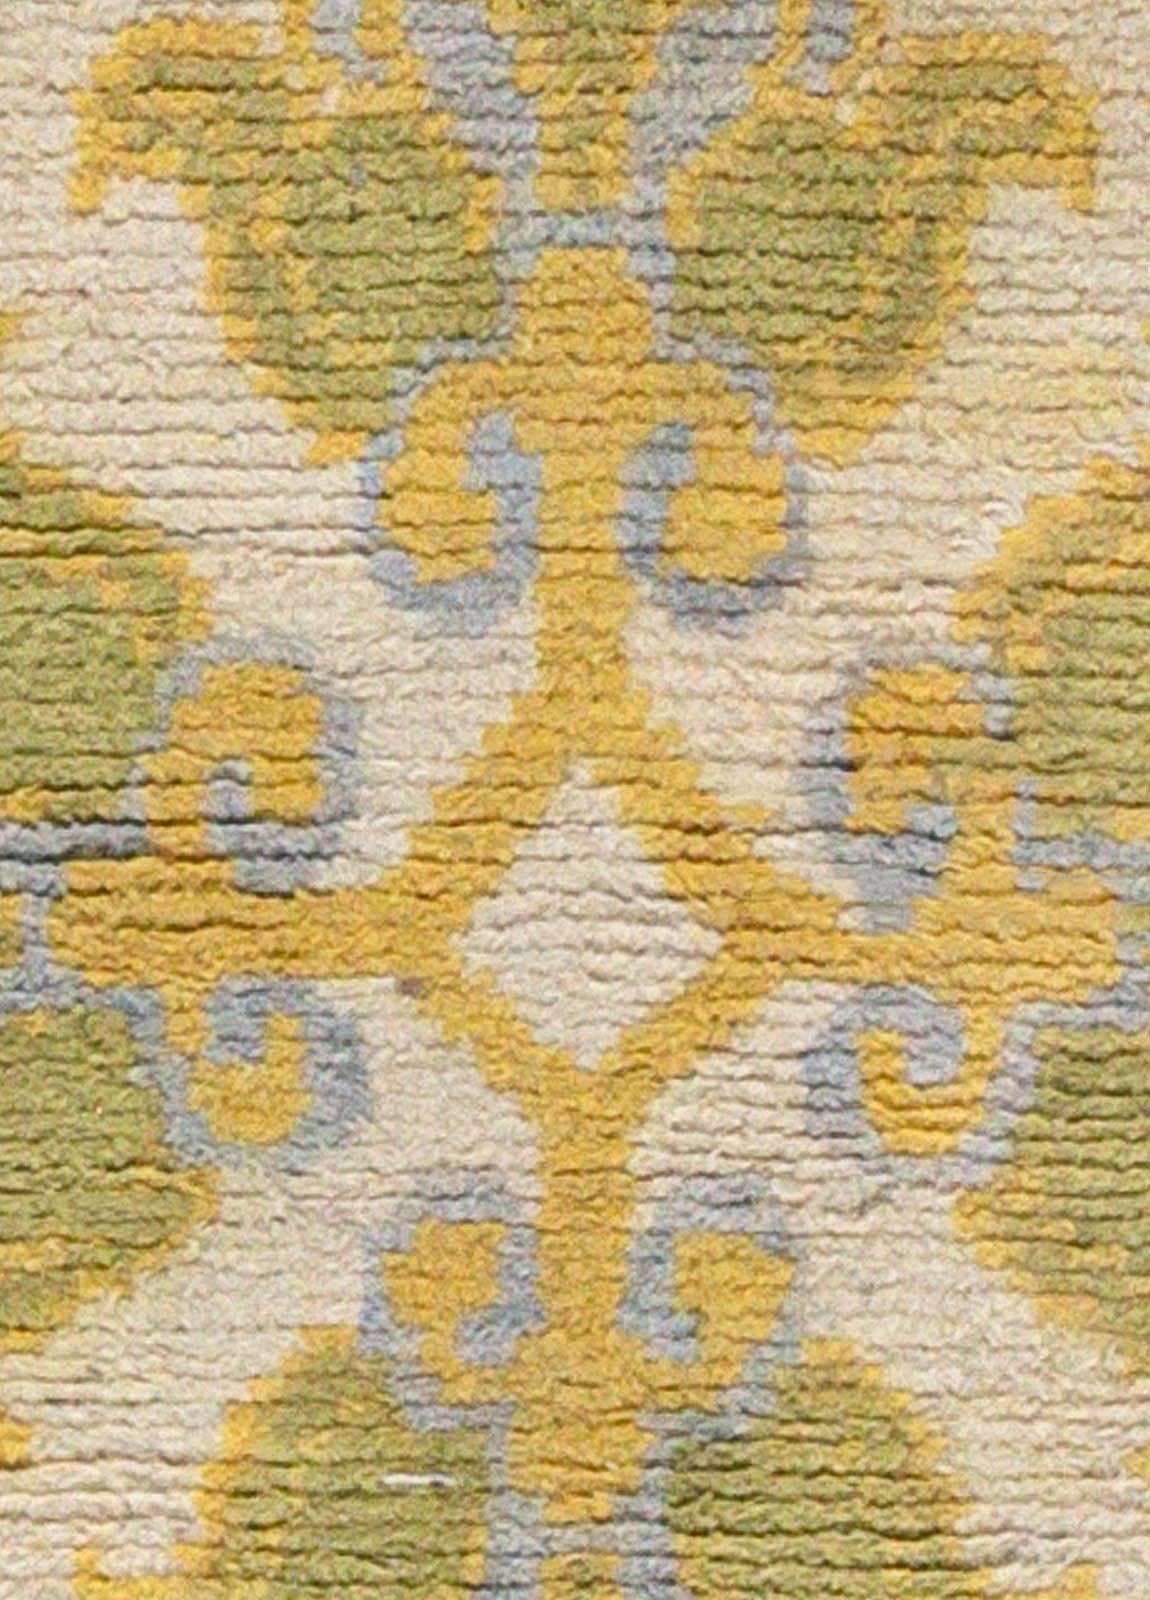 Mid-20th century Japanese floral handwoven wool rug by Doris Leslie Blau
Size: 3'0